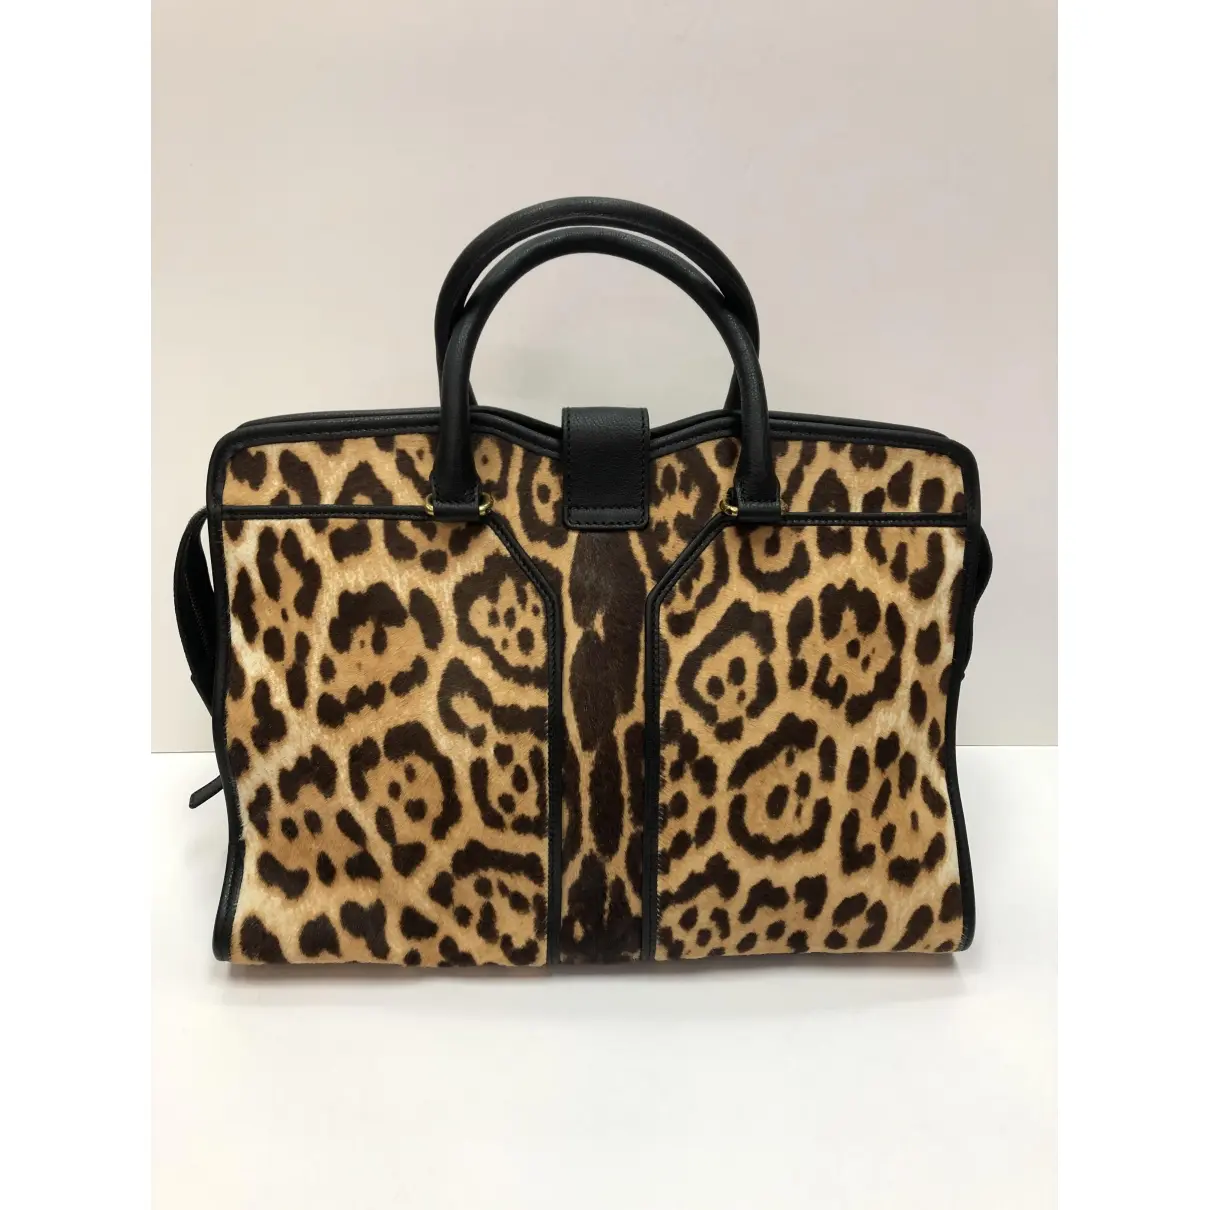 Yves Saint Laurent Chyc leather handbag for sale